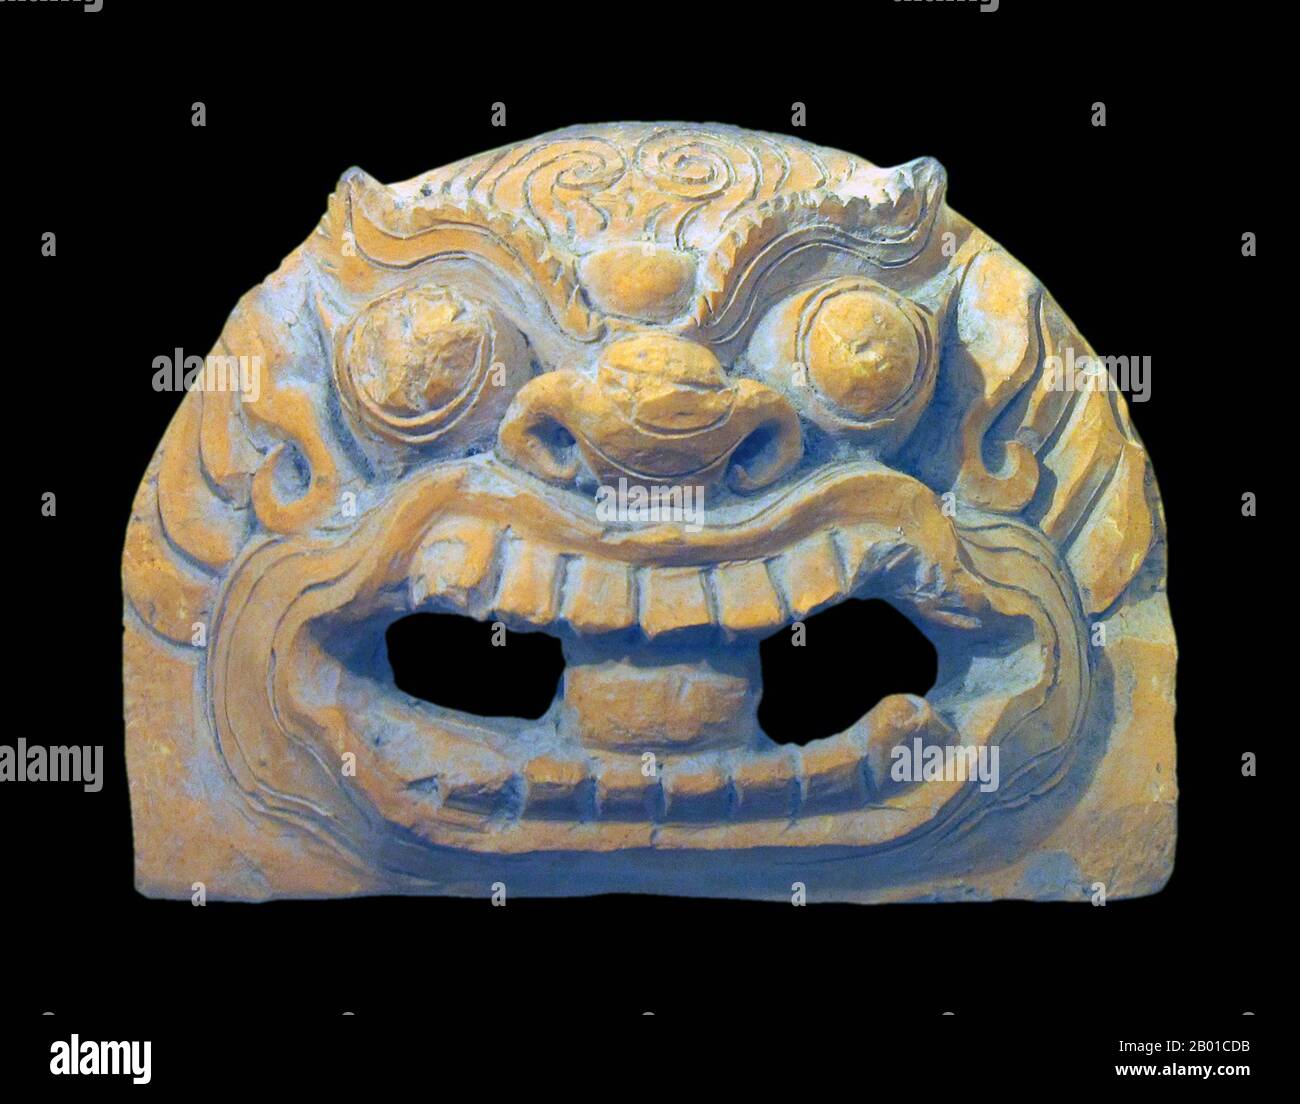 Vietnam: A tiger head, terracotta, 13th-14th century CE. National Museum of Vietnamese History, Hanoi. Photo by Gryffindor - Jbarta (CC BY-SA 3.0 License). Stock Photo